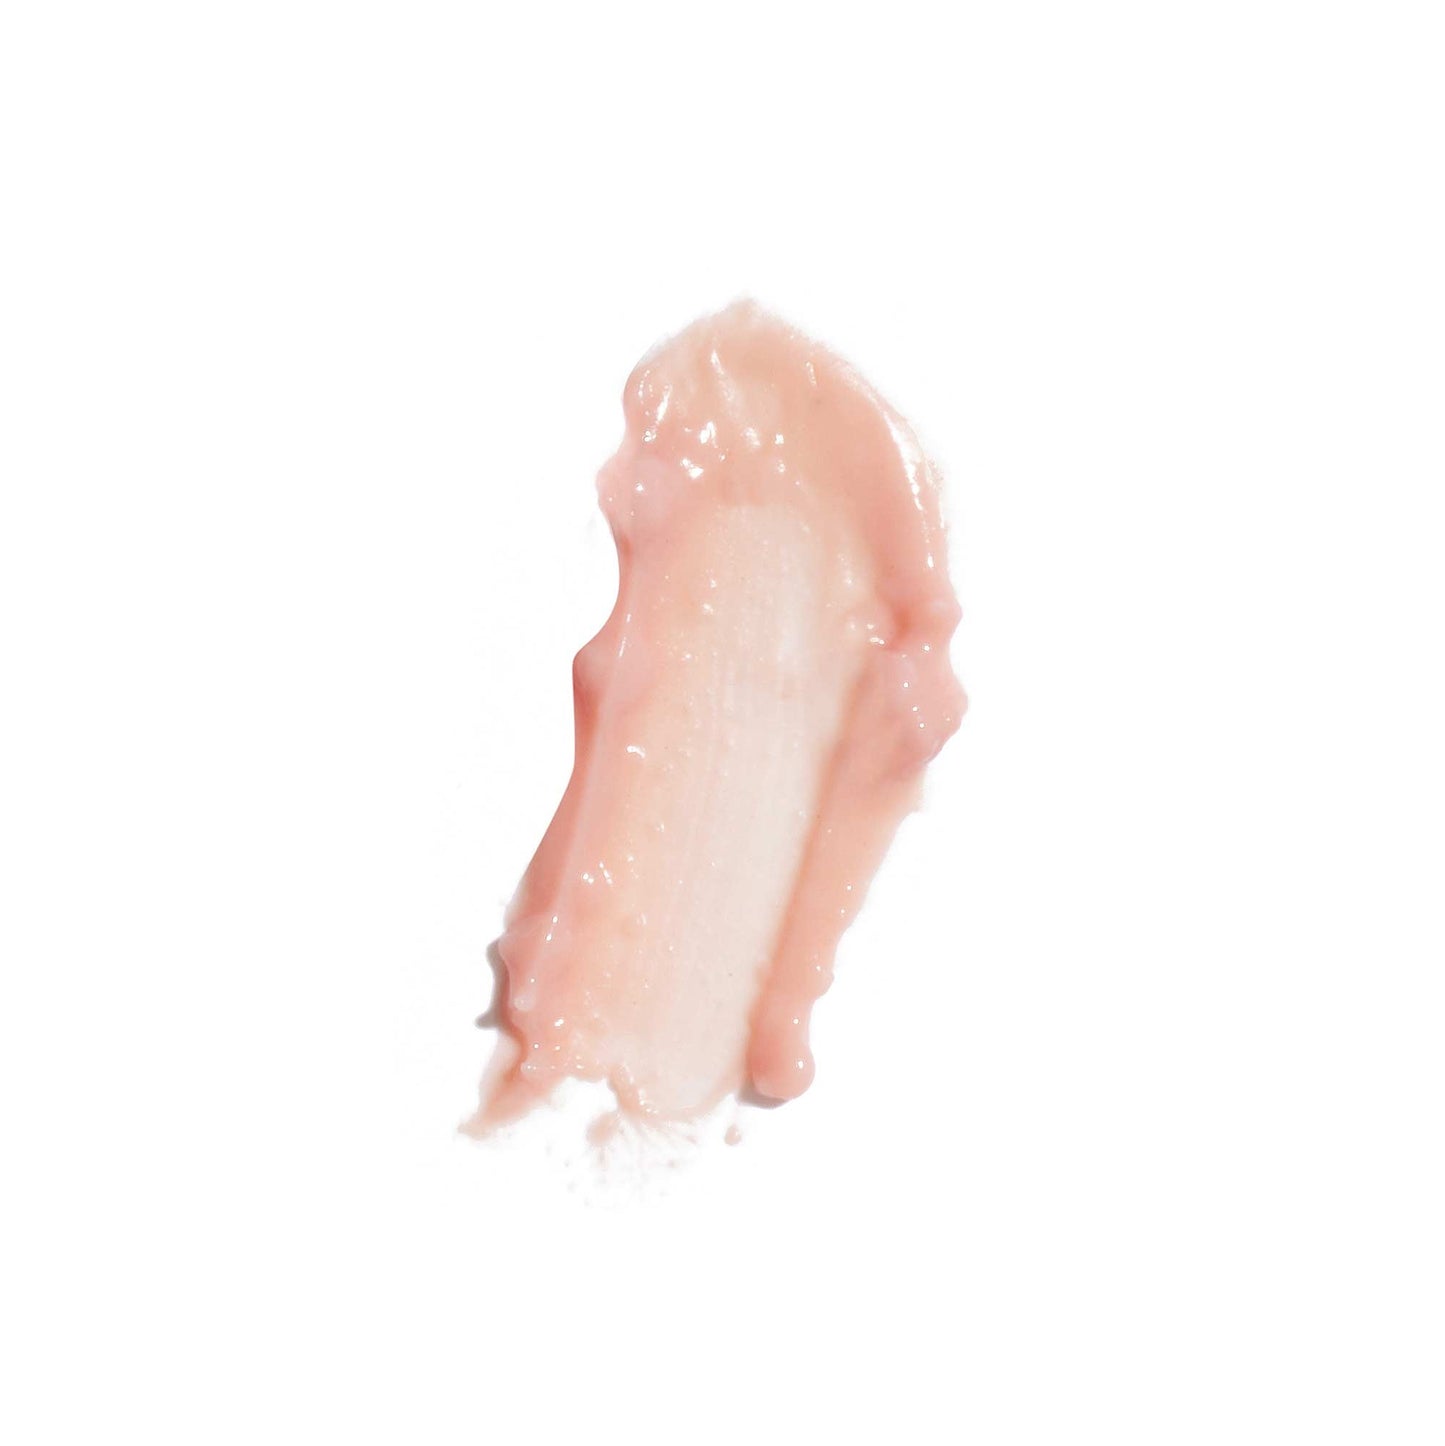 ATTITUDE Oceanly Lip gloss stick Silky Pink 3.4g Unscented 16110-btob_en?